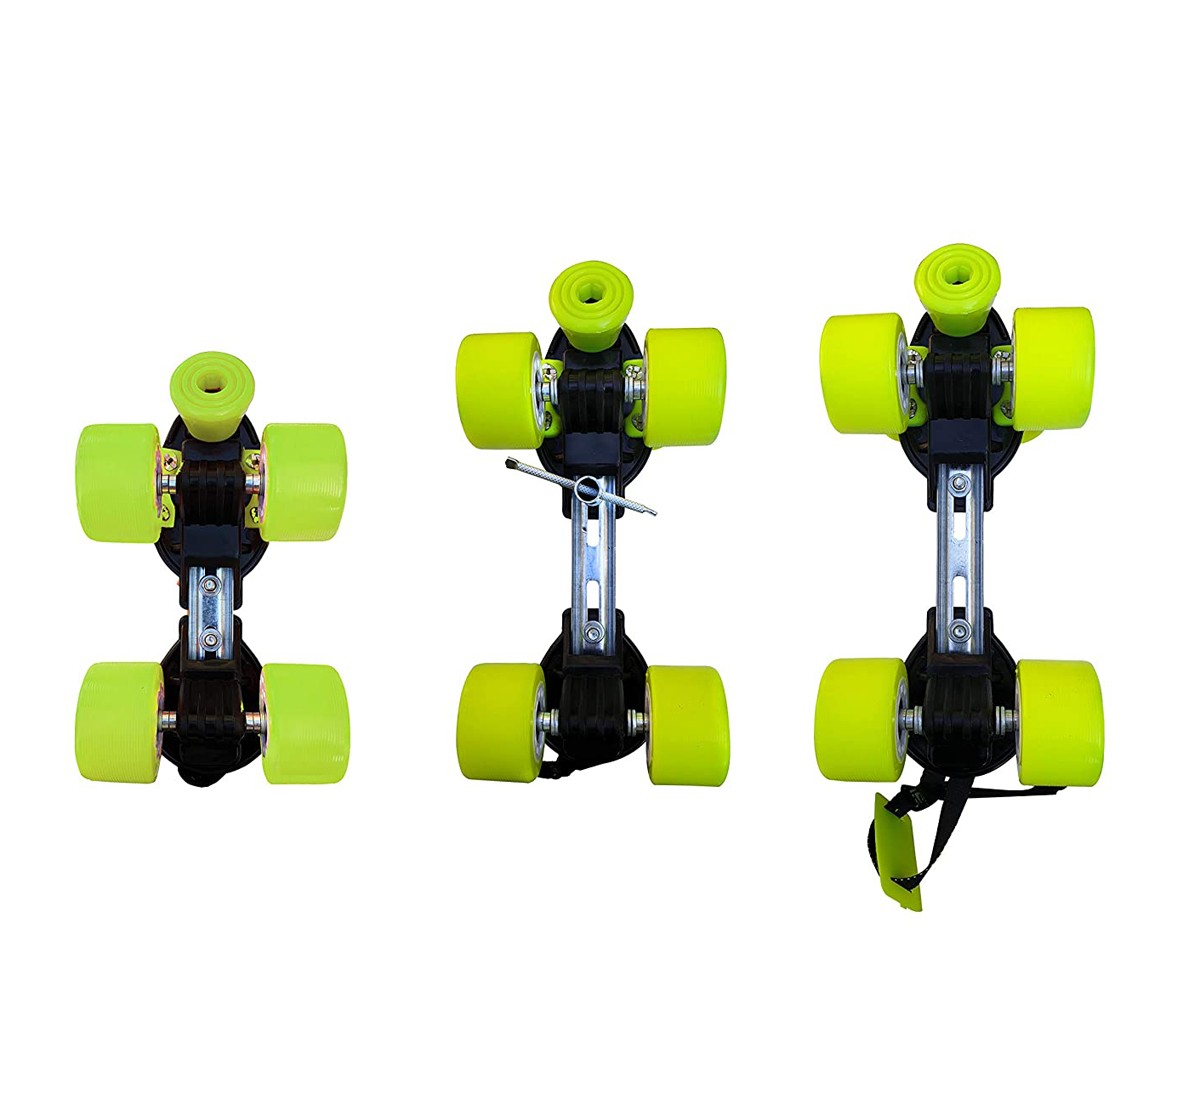 Jaspo Cruiser Senior Players Quad Adjustable Roller Skates Combo Multicolor 8Y+